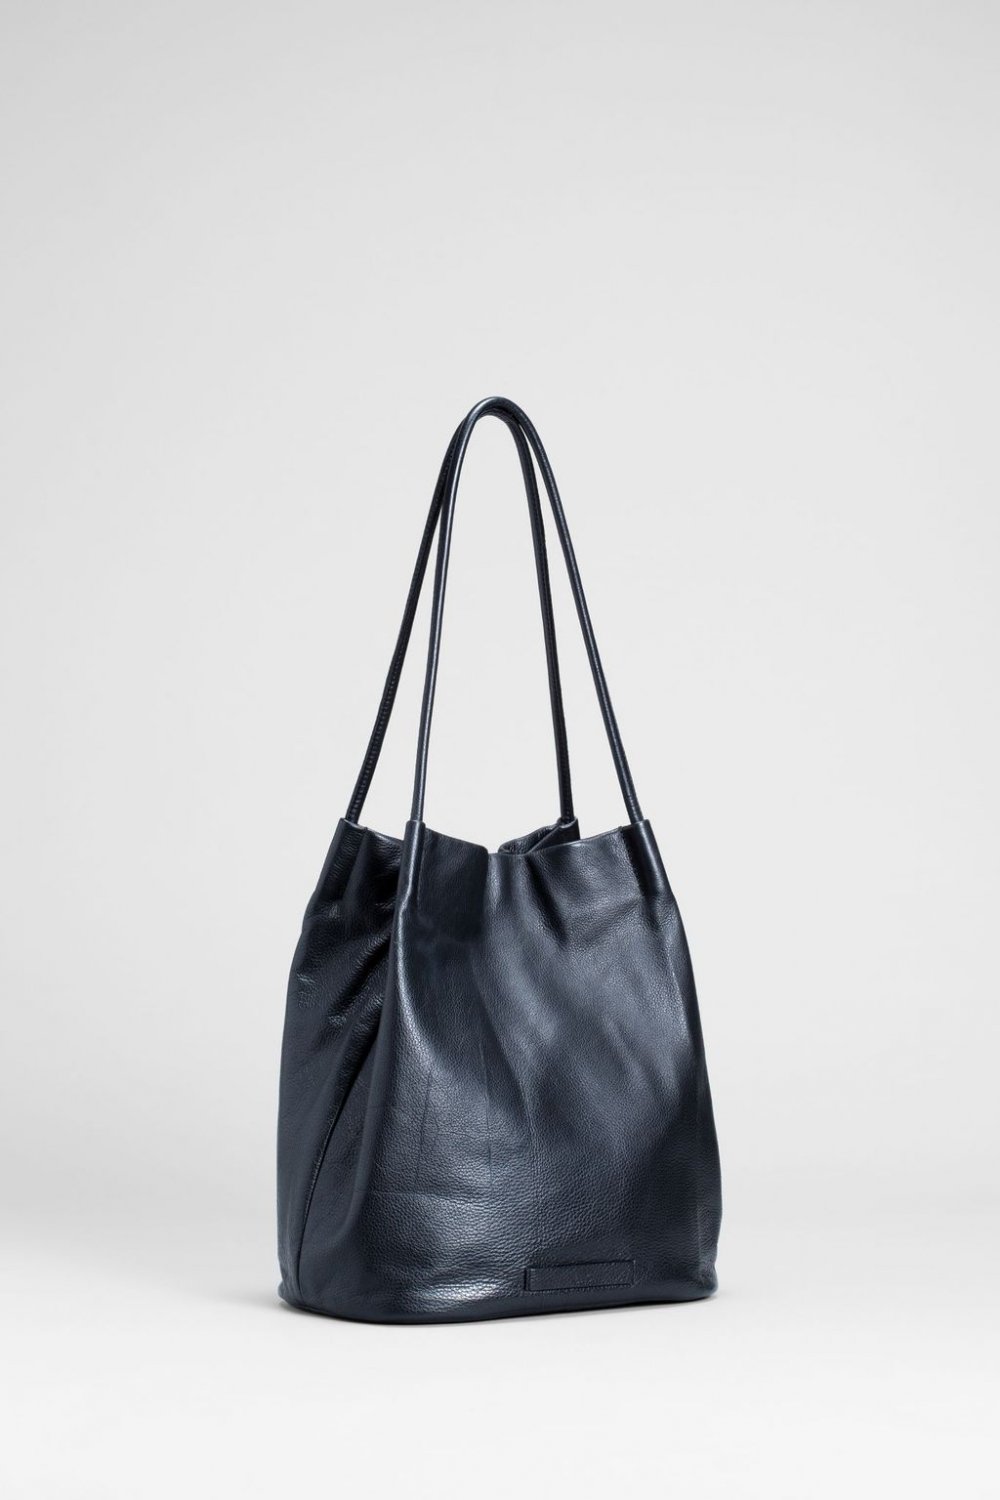 elk-orsa-handbag-black 2